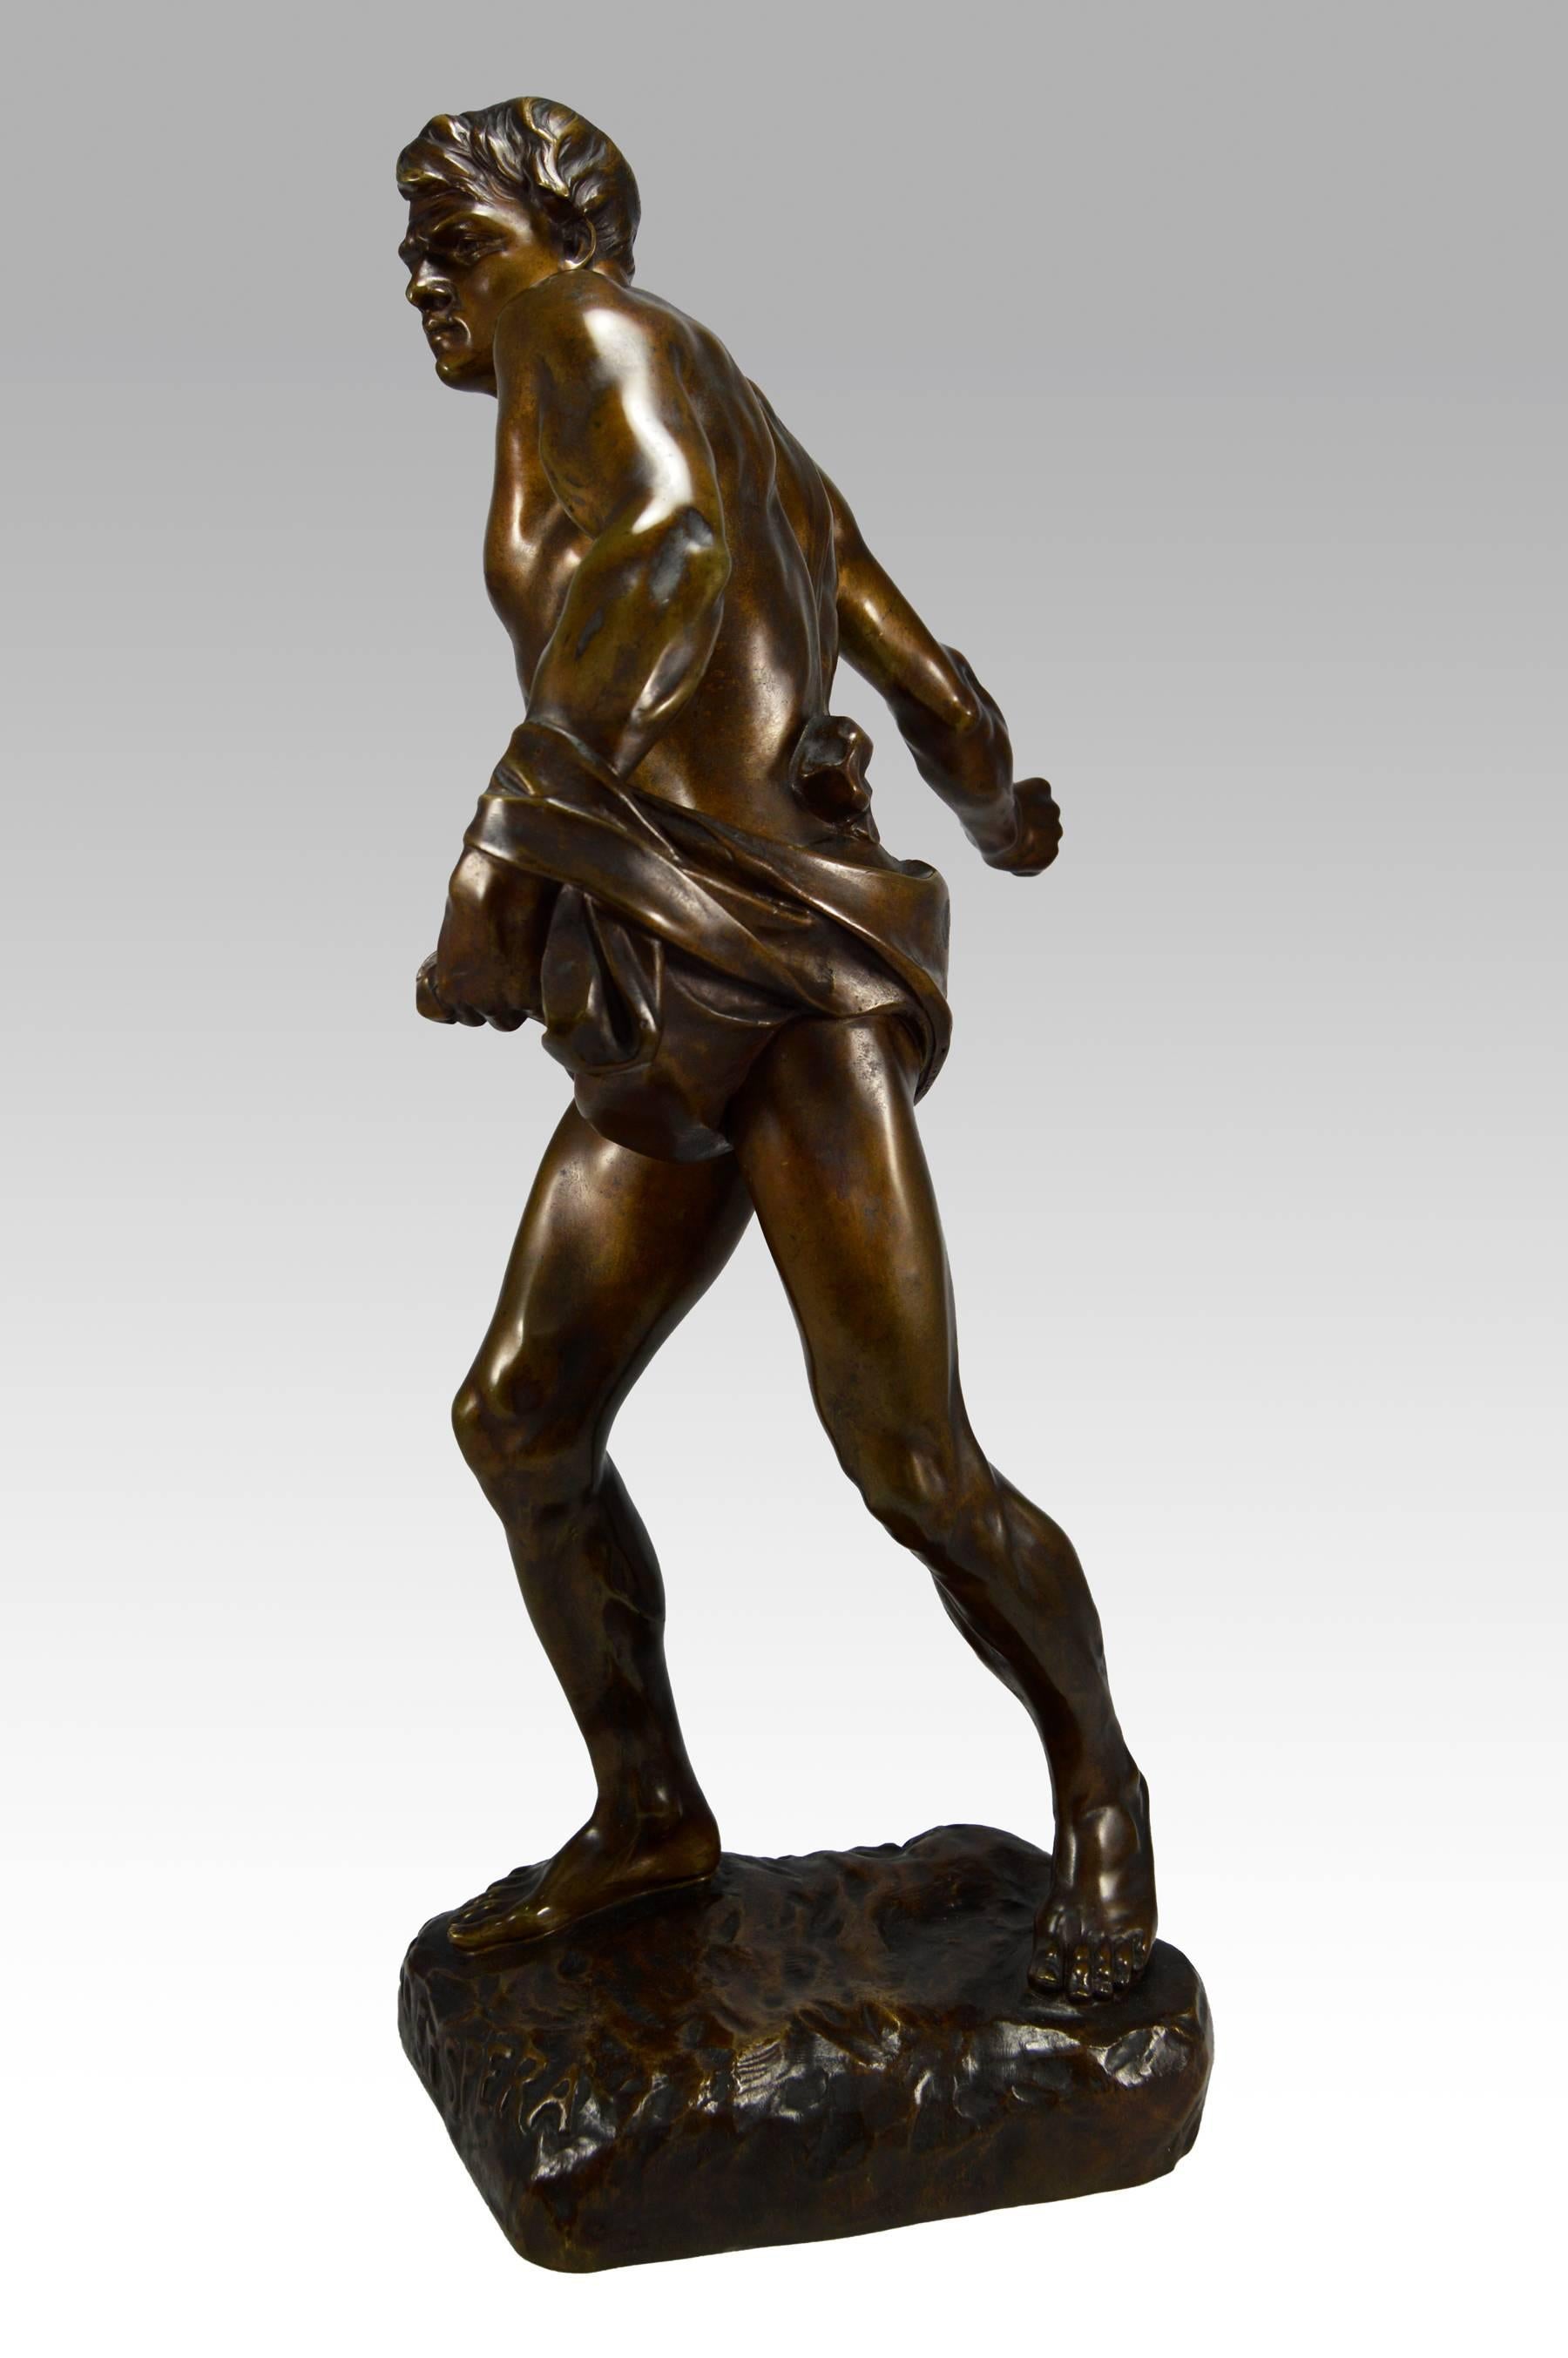 19th Century French bronze sculpture of a man sowing seeds - Sculpture by Henri Desire Gauquie